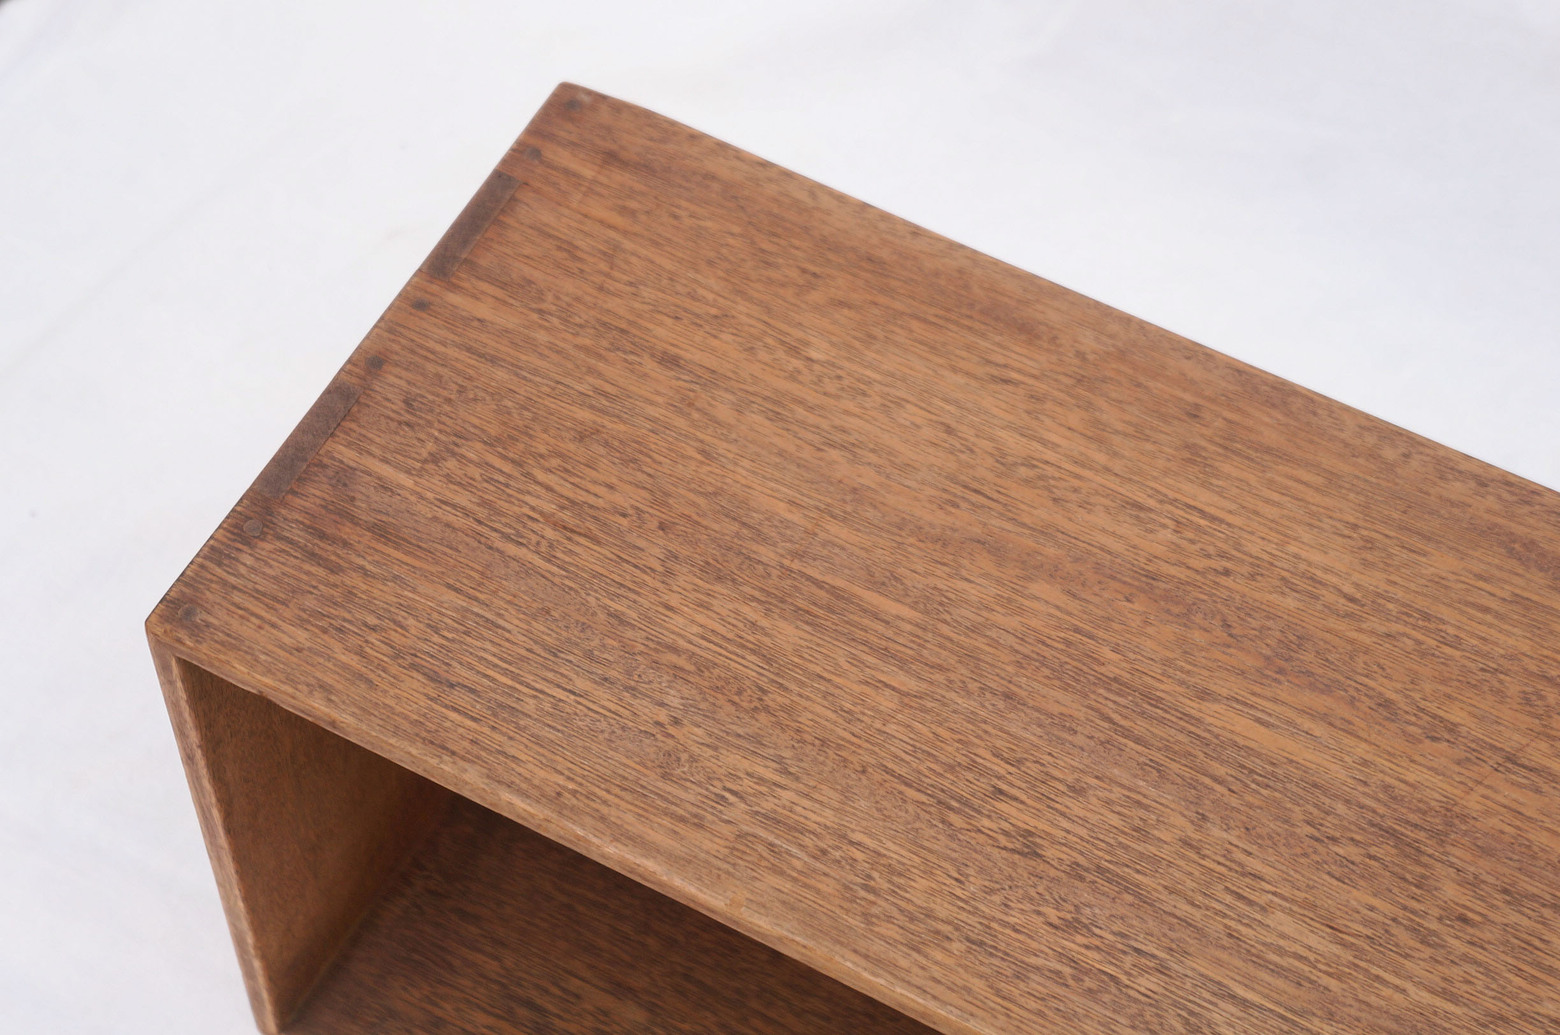 Japanese Vintage Wooden Box Shelf/ジャパンヴィンテージ ボックスシェルフ 木箱 収納ボックス レトロ シャビー 大 8